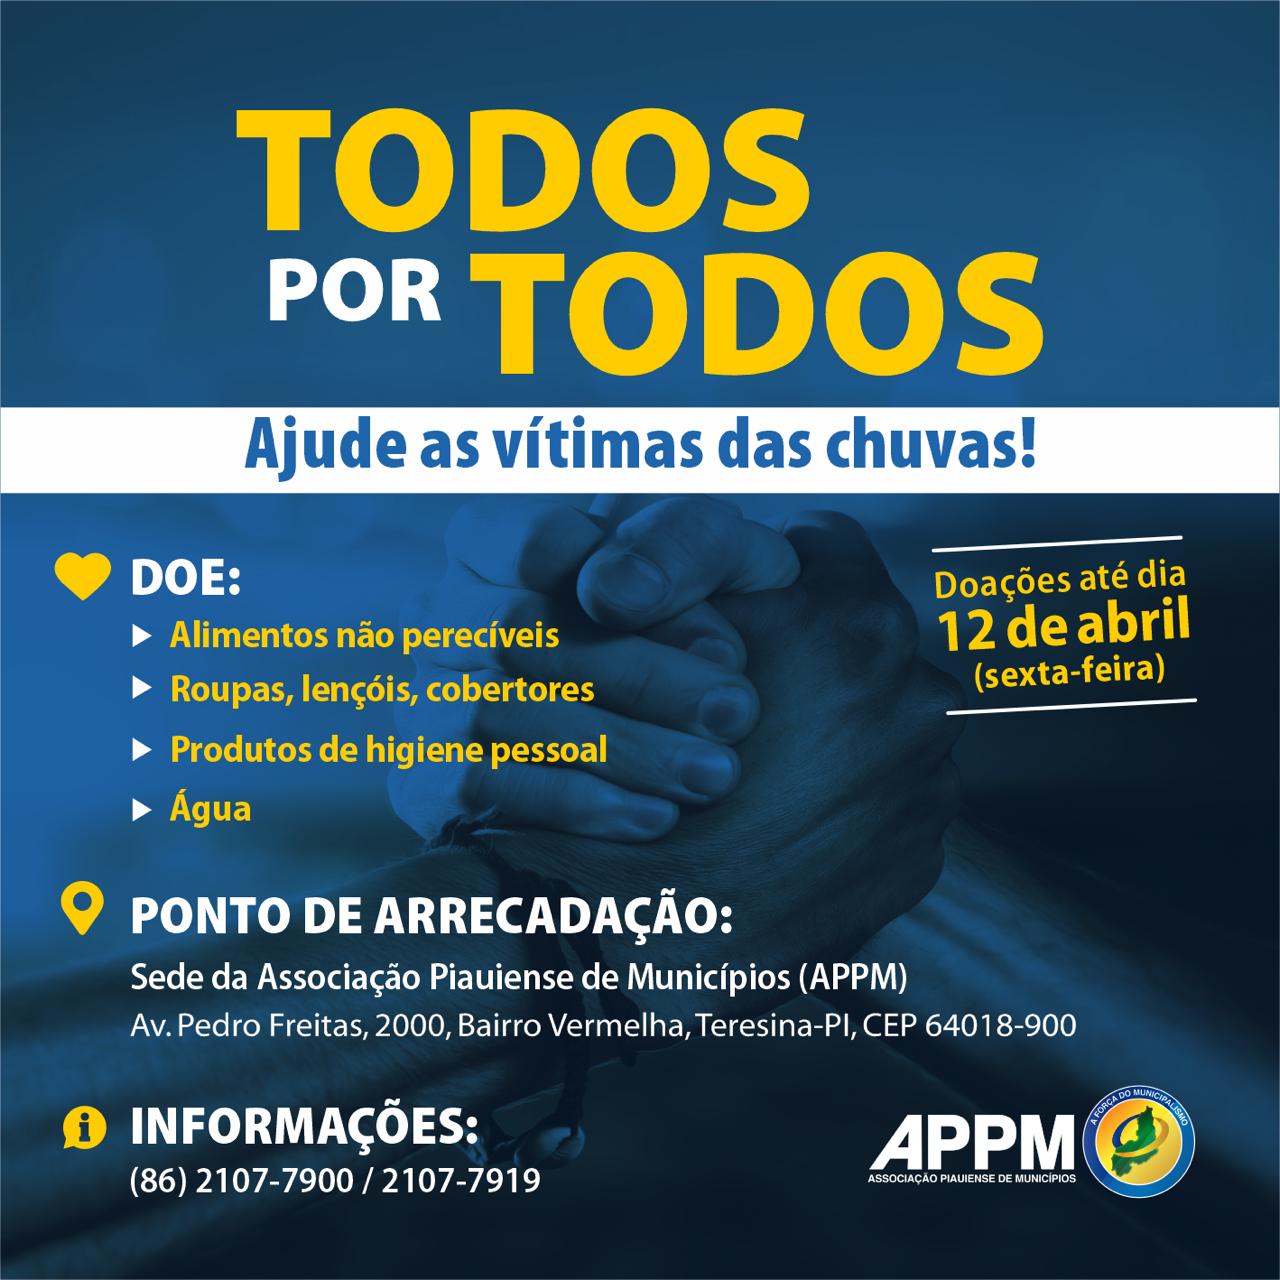 APPM realiza campanha para arrecadar donativos